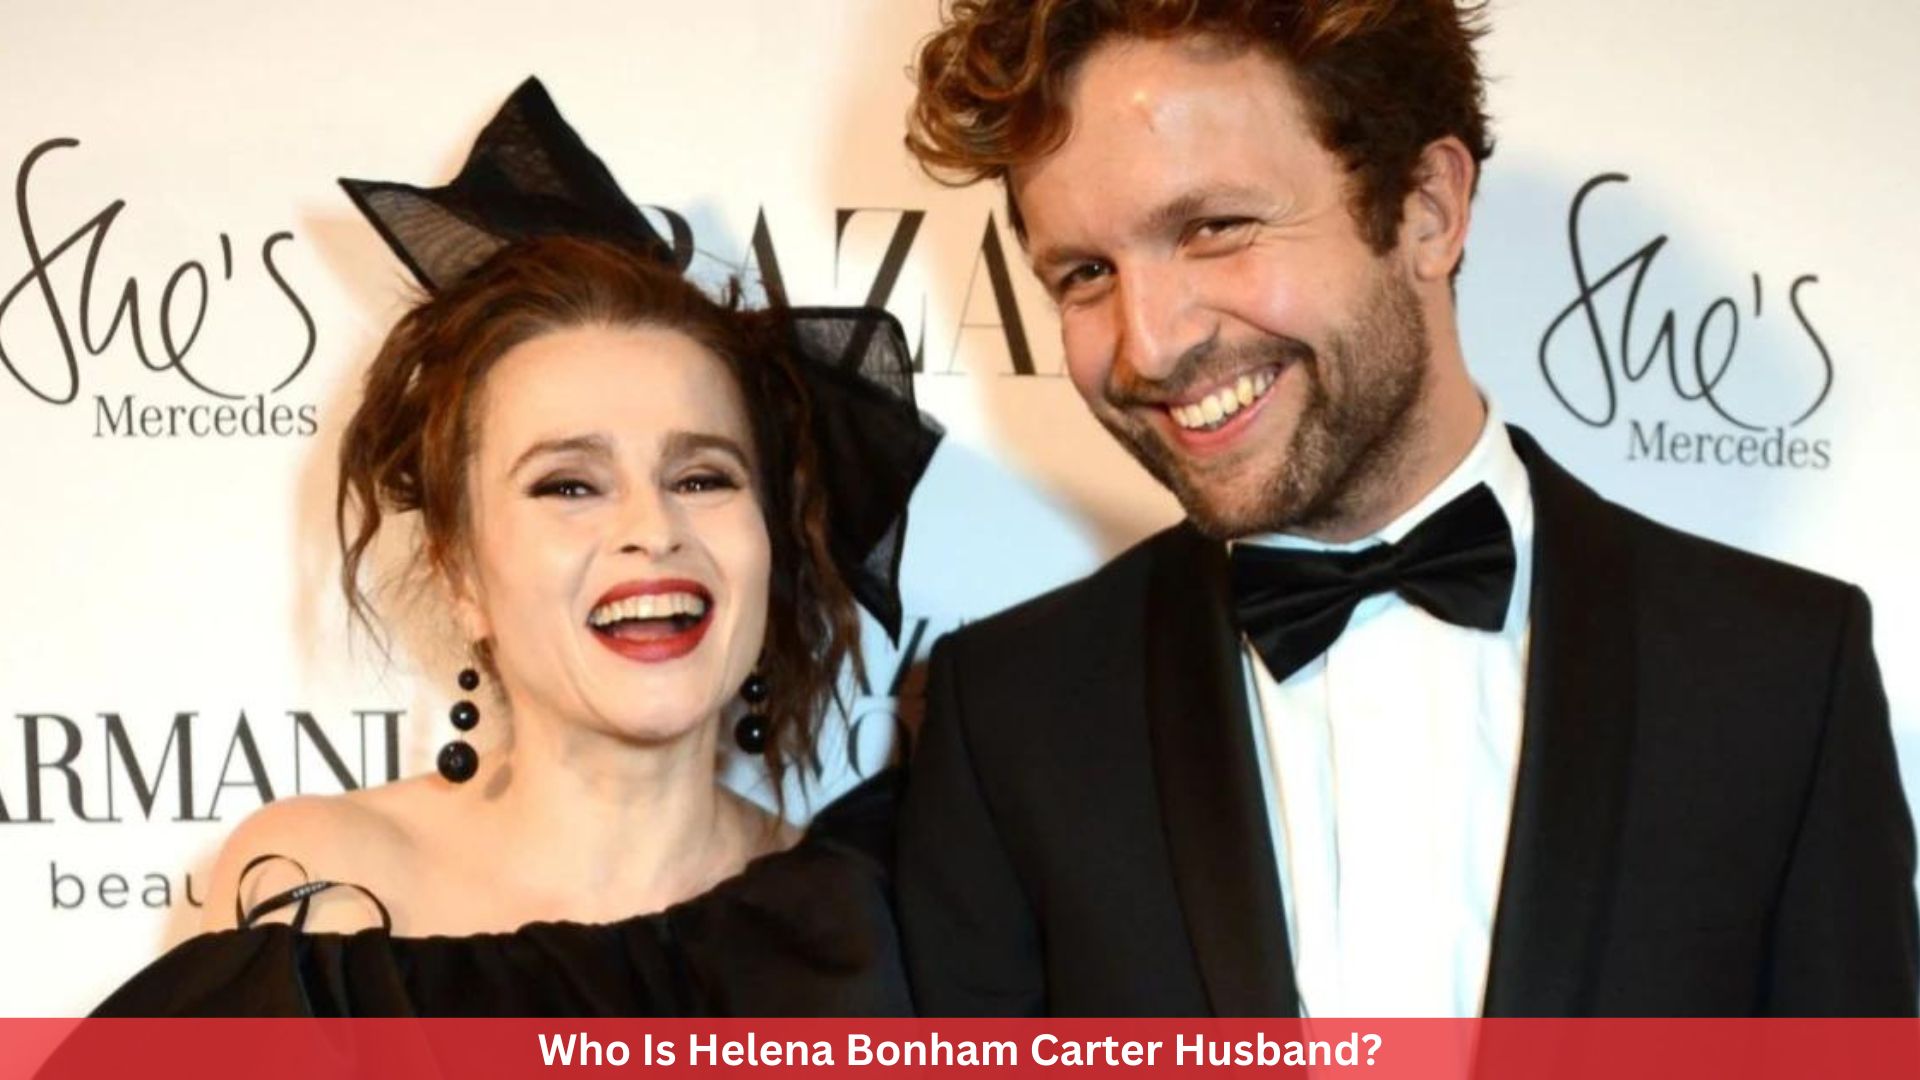 Who Is Helena Bonham Carter Husband?